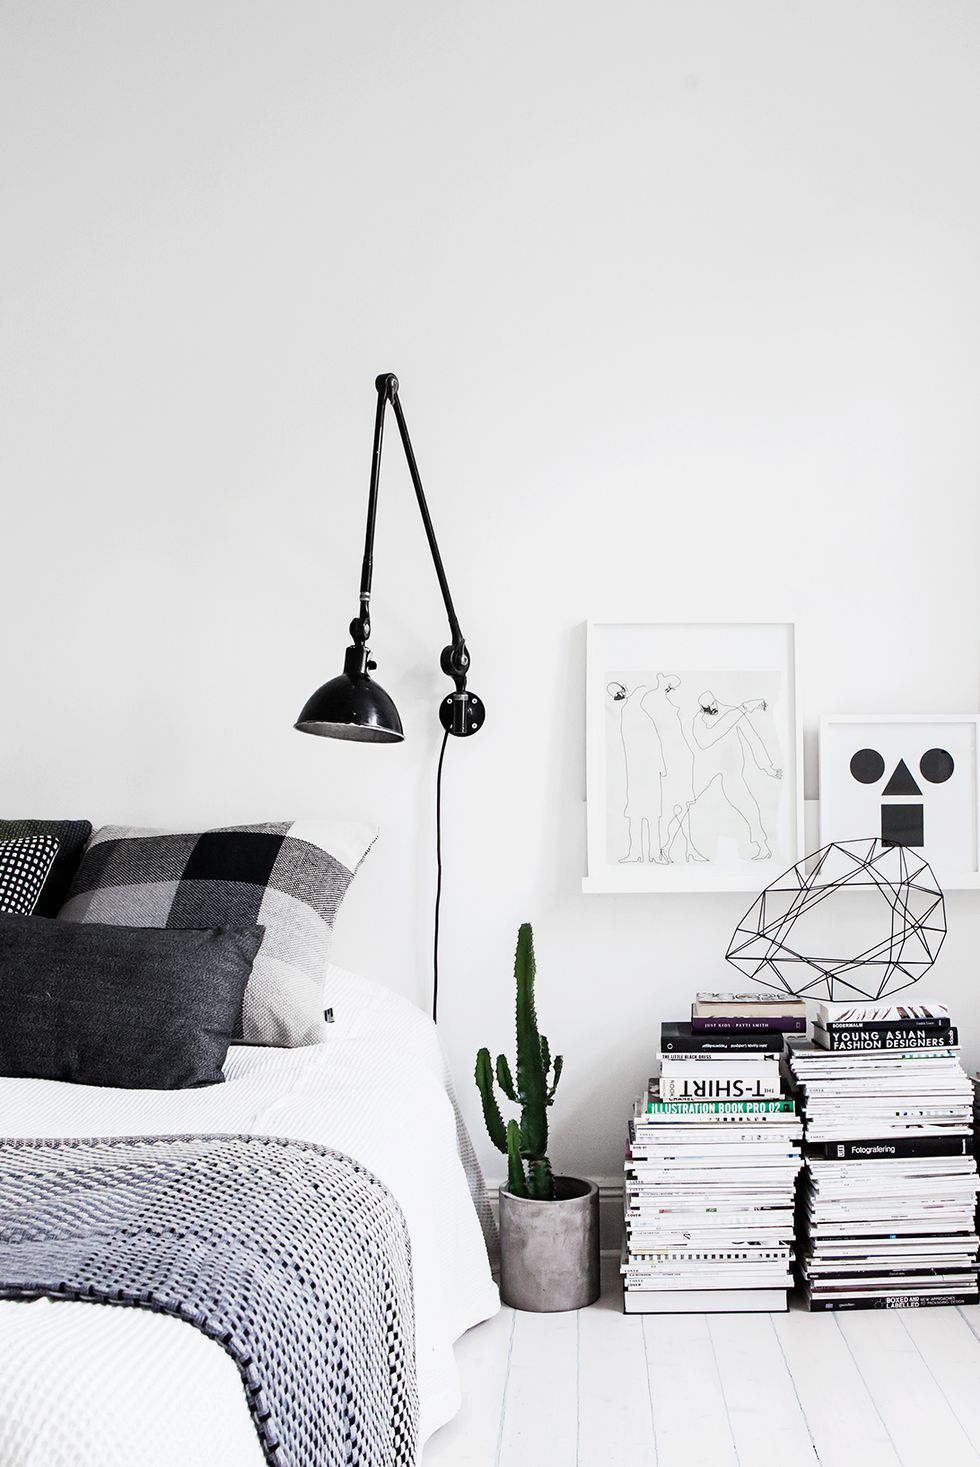 30 Small Bedroom Design Ideas How To Decorate A Small Bedroom,Small Business Instagram Attractive Interior Designer Bio Instagram